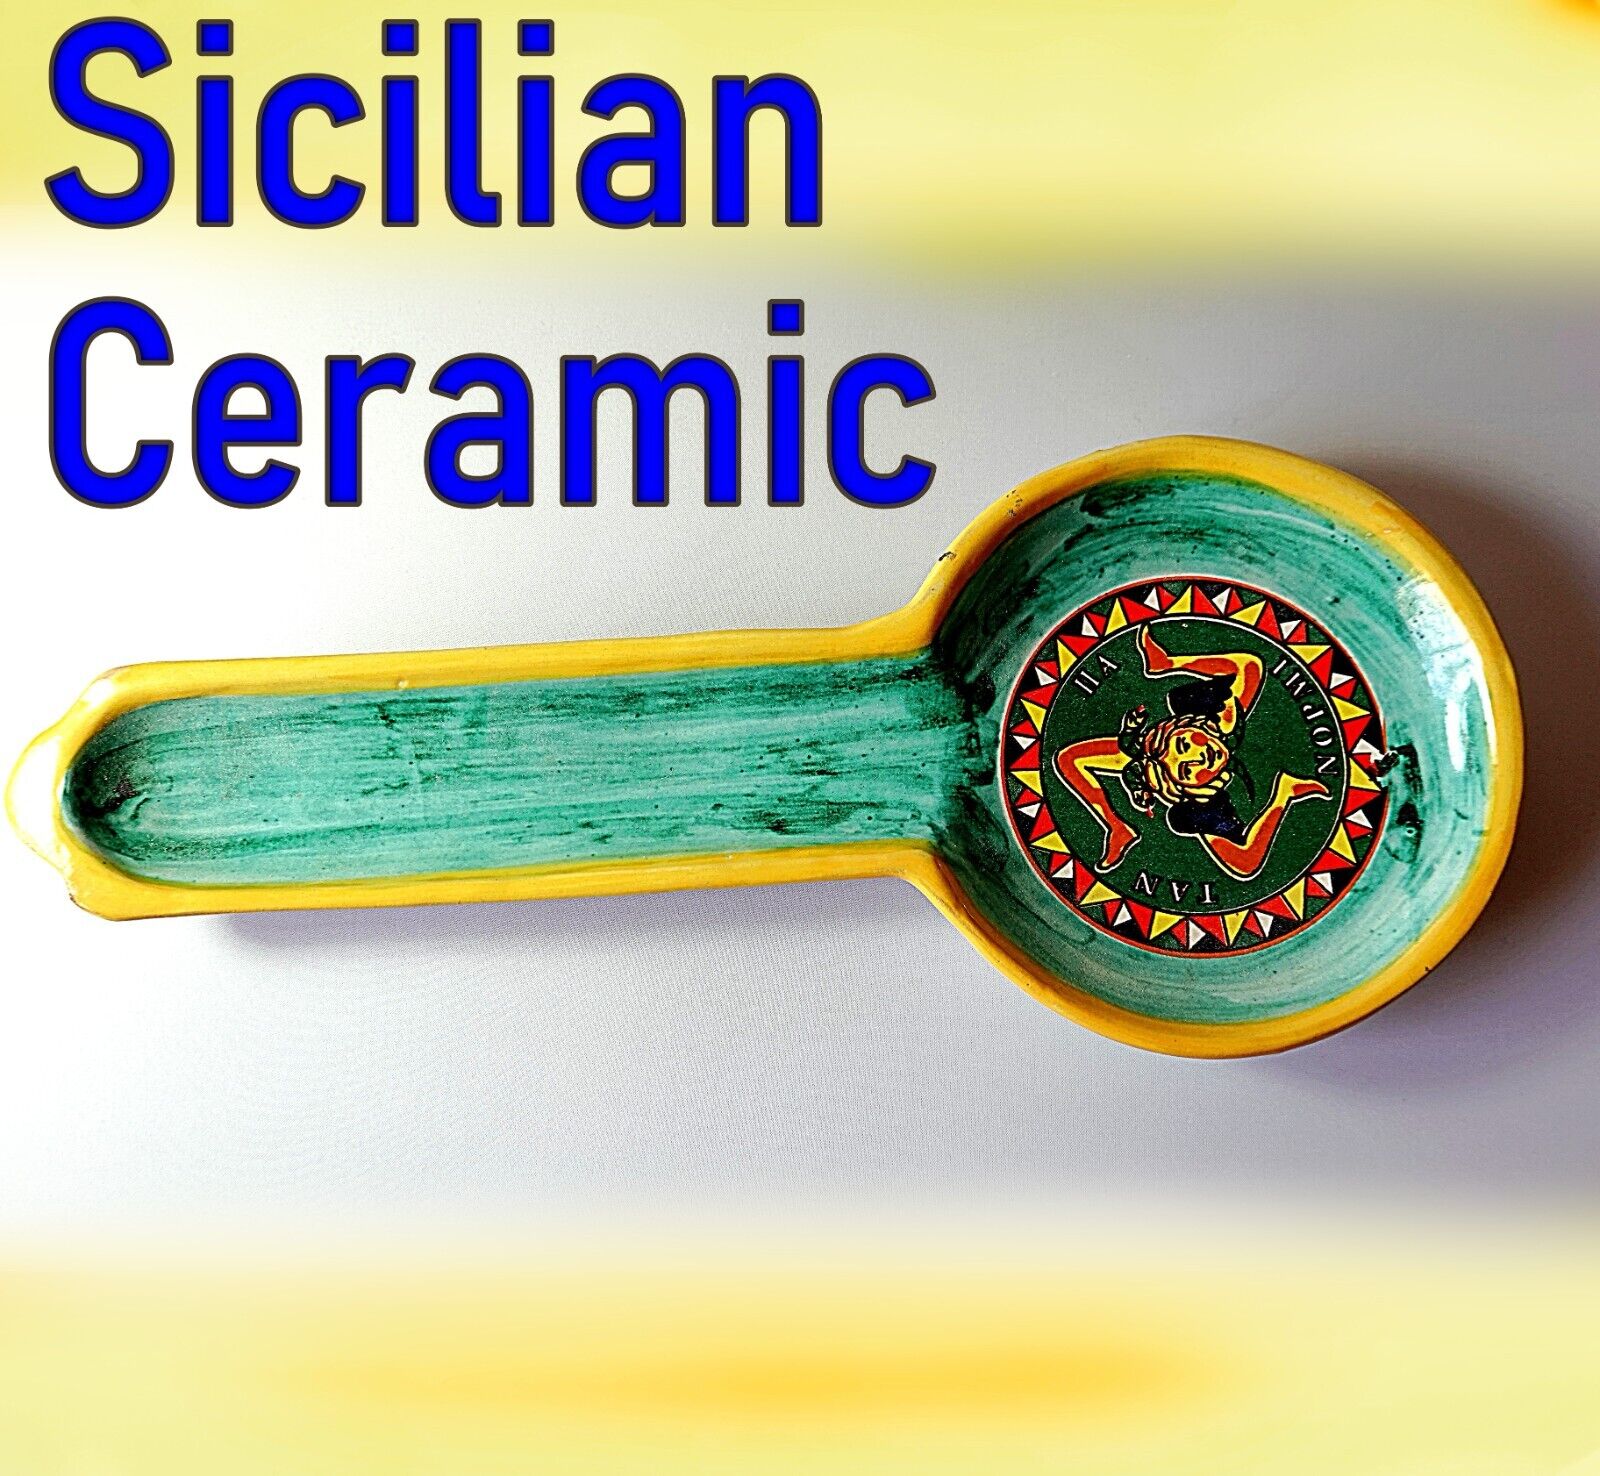 Italian Sicilian Ceramic Pottery Spoon Rest -With Trinacria Symbol - Never Used